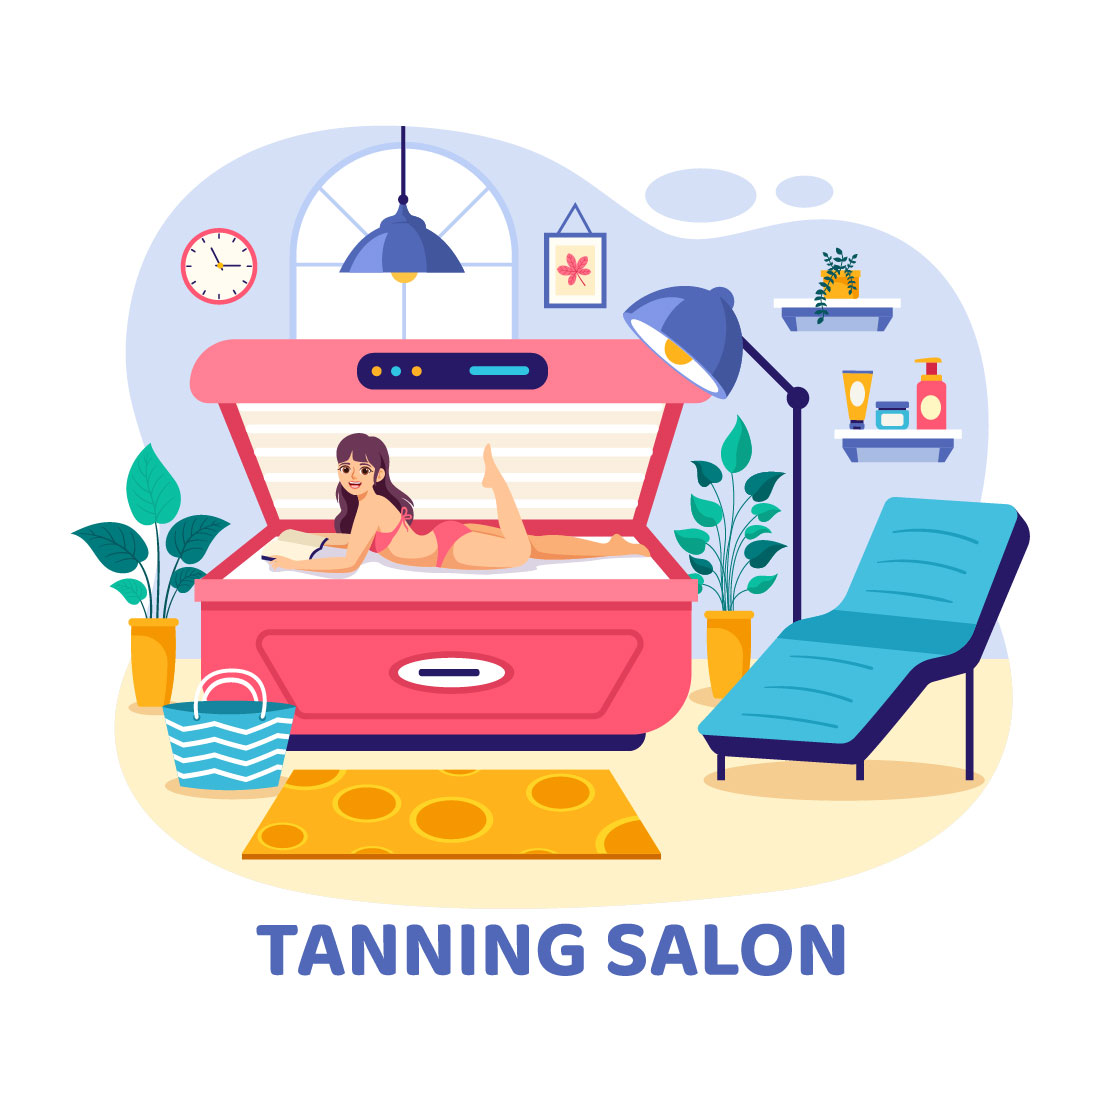 10 Tanning Salon Illustration preview image.